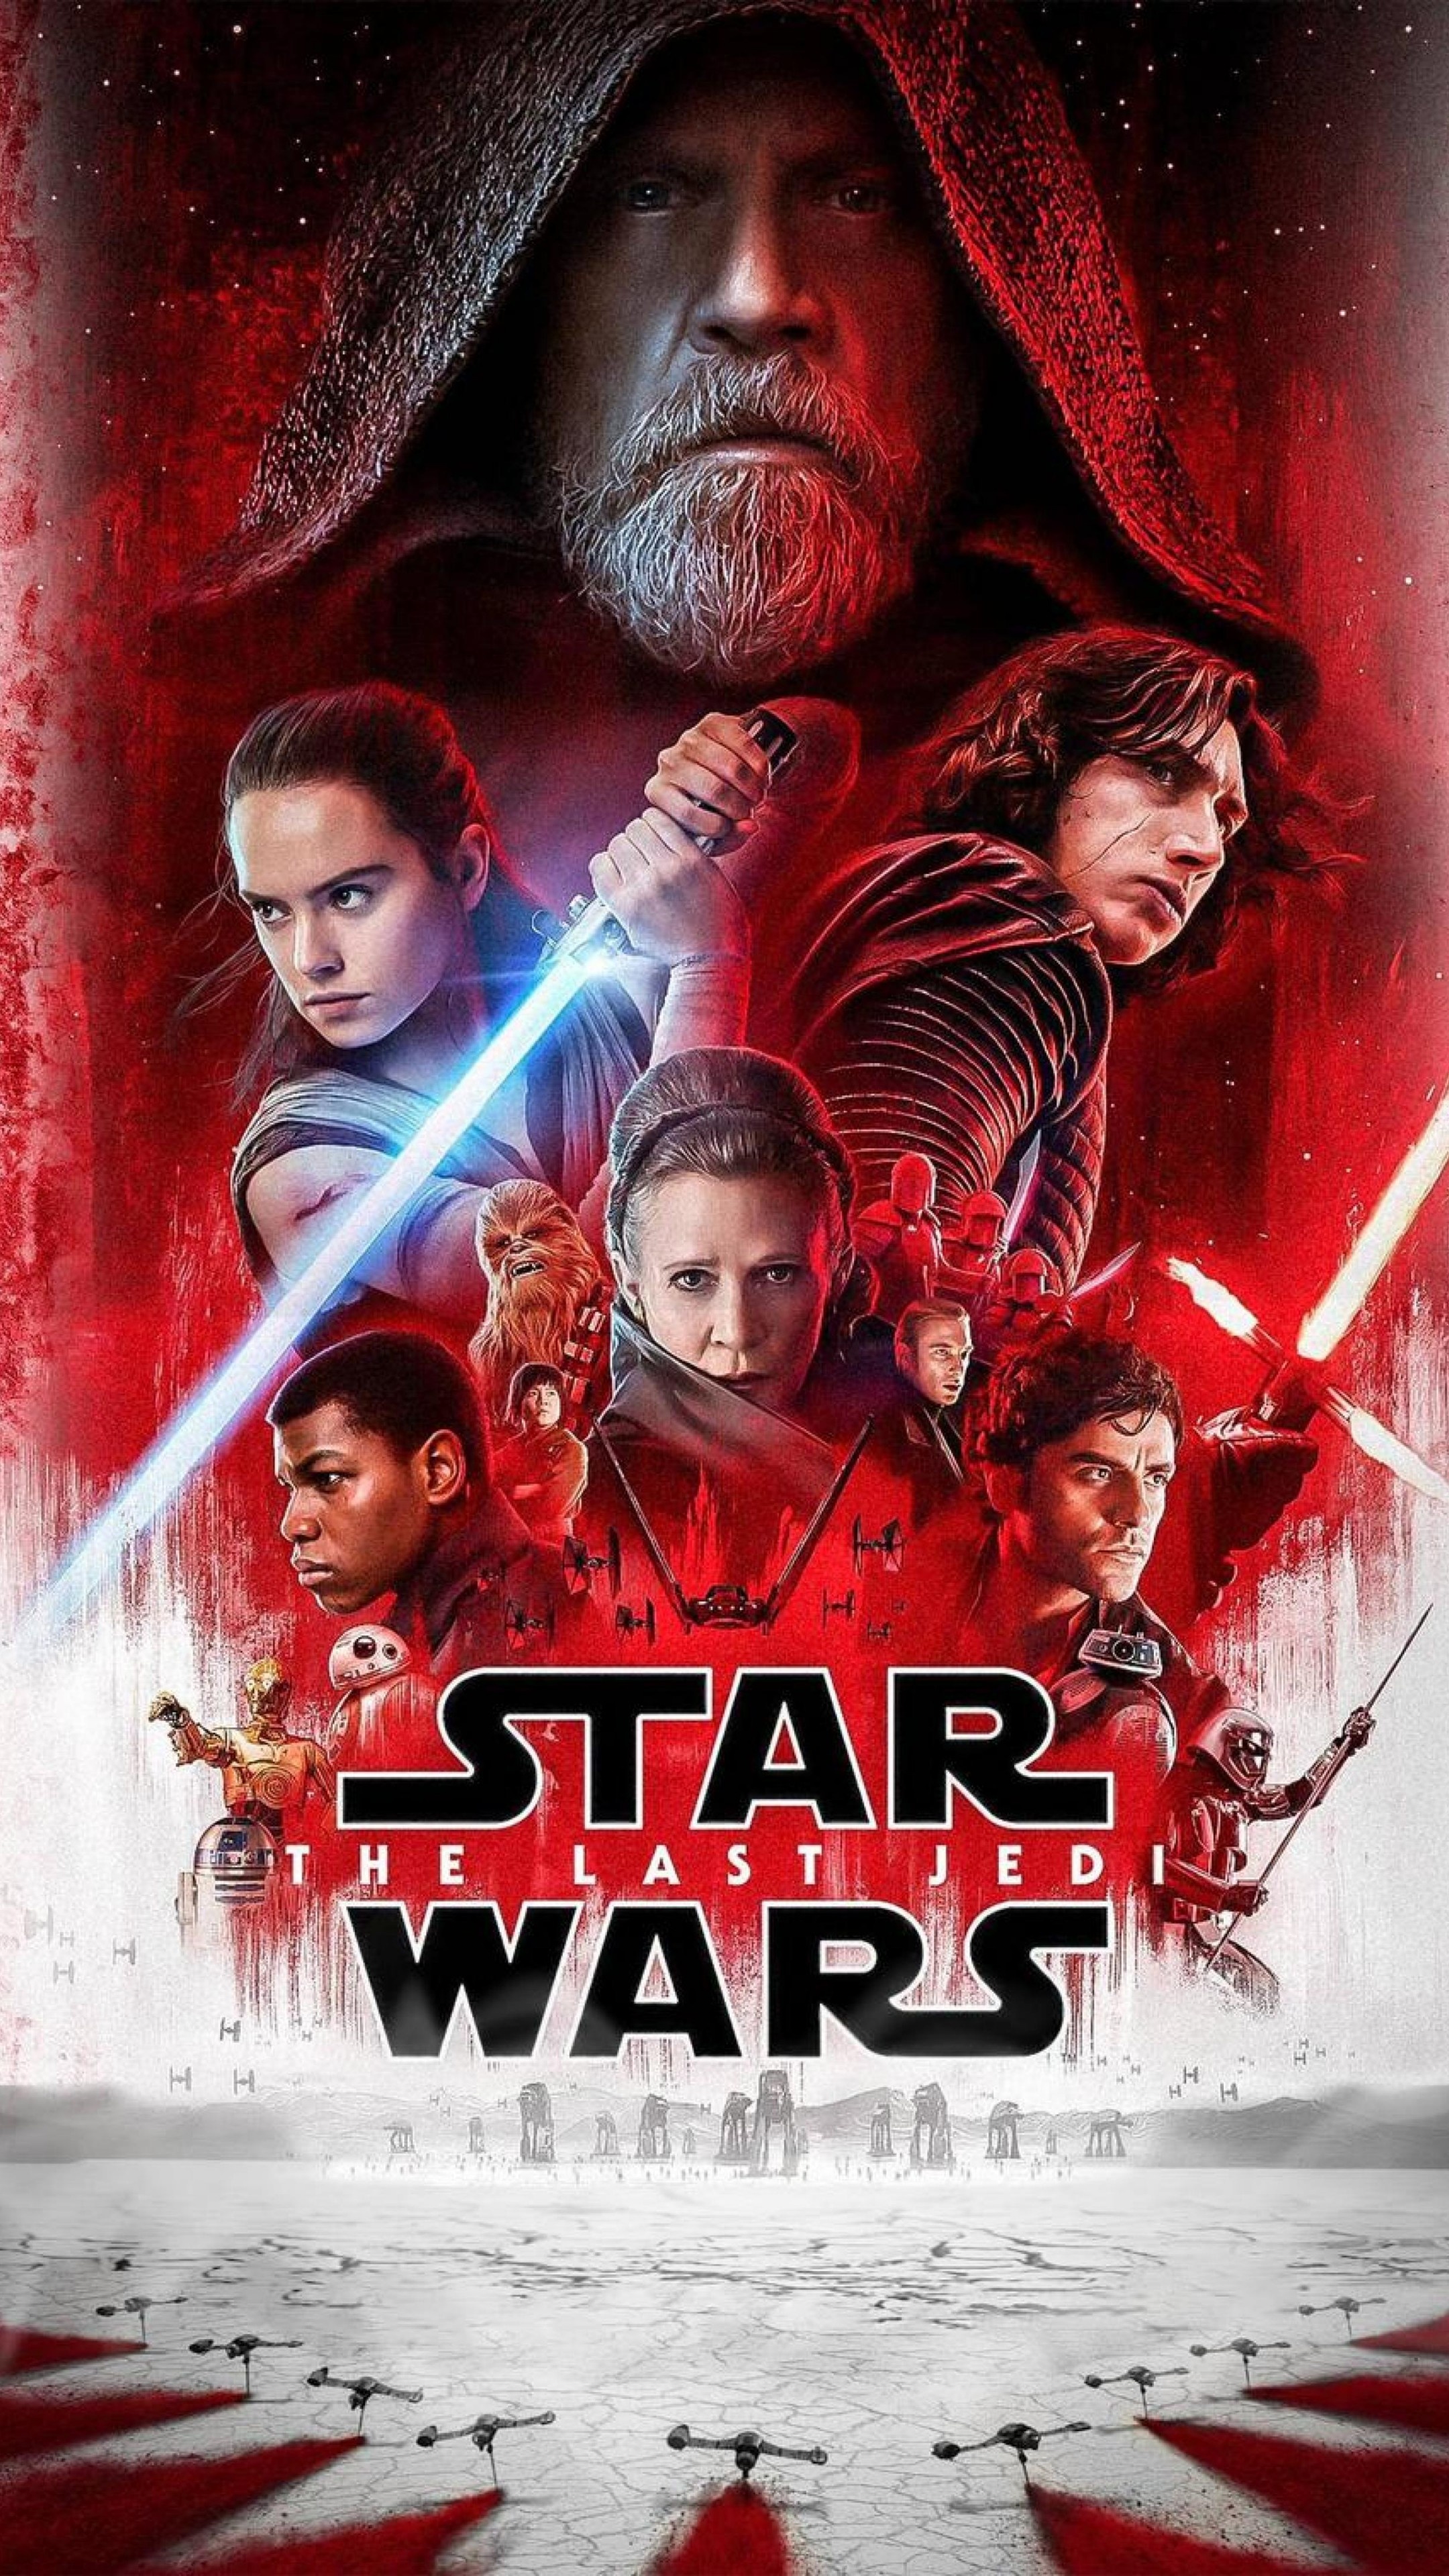 Adam Driver, Star Wars The Last Jedi, Daisy Ridley, Carrie Fisher, 2160x3840 4K Handy